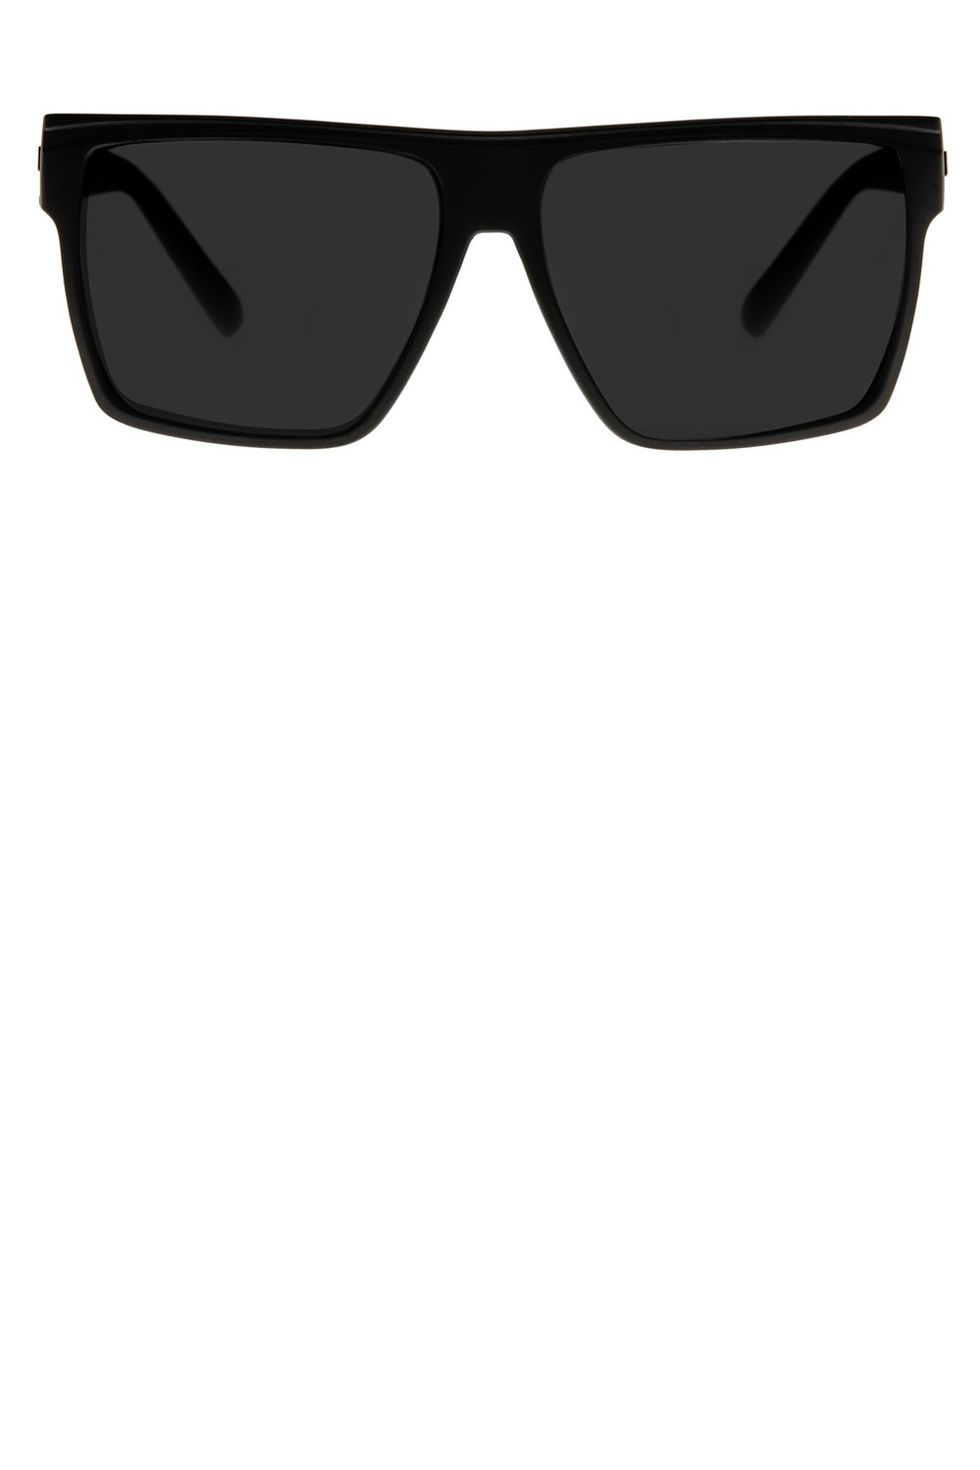 <p><strong>Le Specs</strong> sunglasses, $69, <a href="https://lespecs.com/dirty-magic-1502123-black-rubber-silver-mirror-polarized-lsp1502123" target="_blank">lespecs.com</a>. </p>